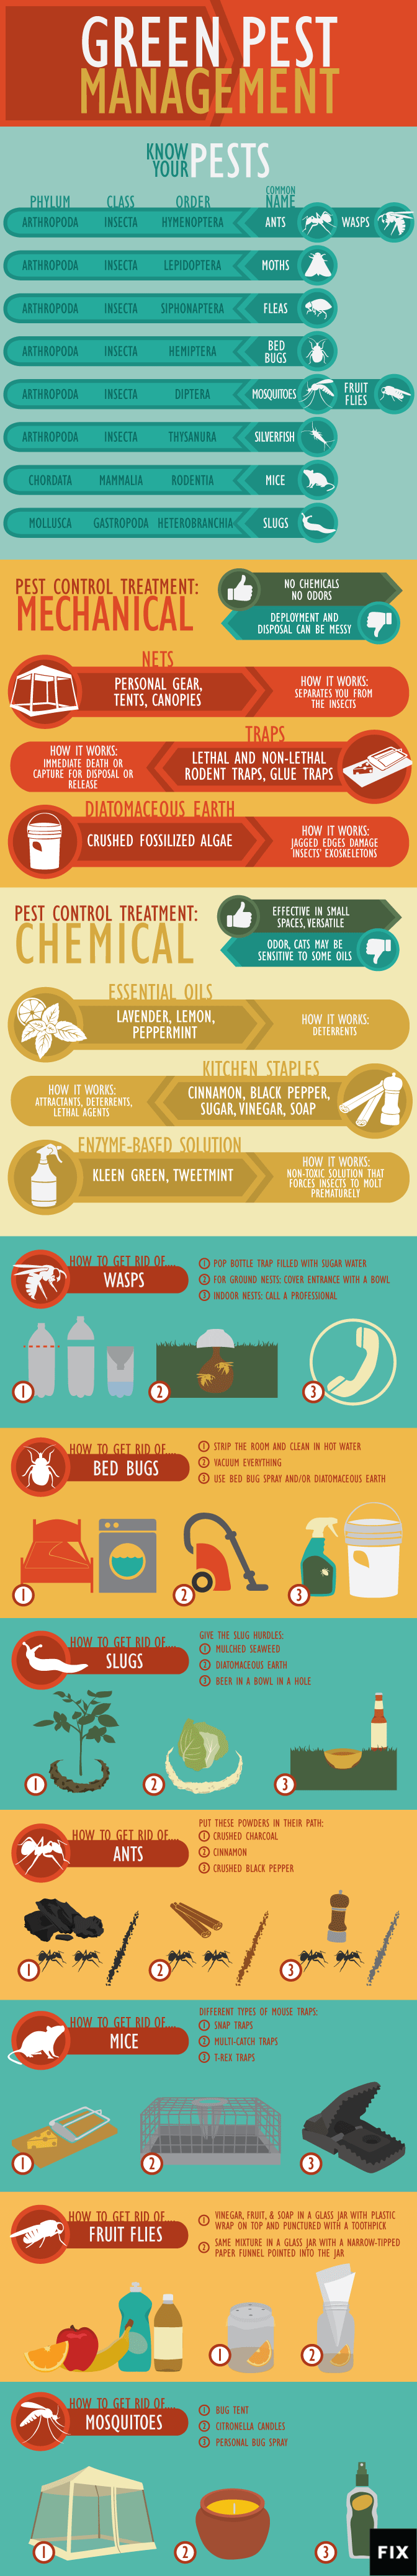 Infographic: green pest management